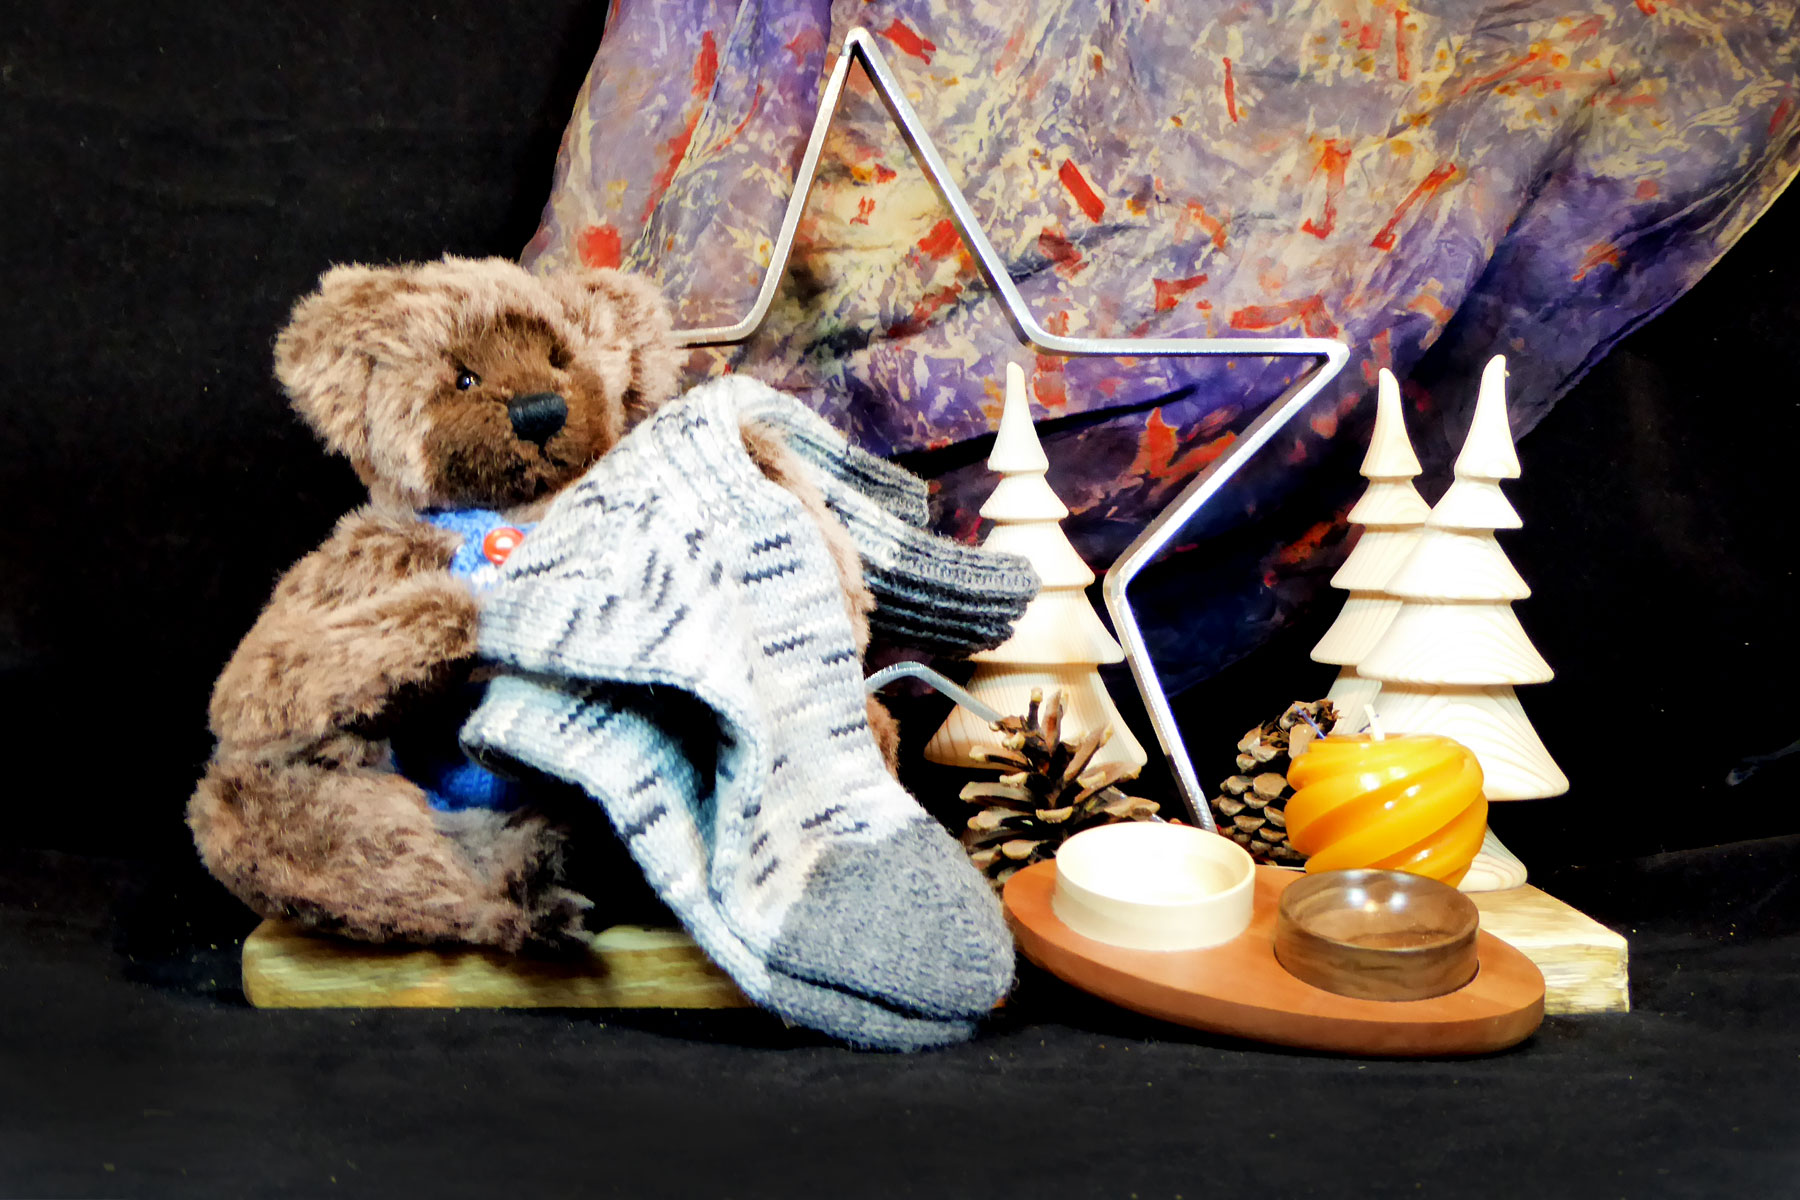 Braunes Arrangement mit Ecoprinttuch, Teddybär, Socken, gedrechselten Bäumchen, Kerze